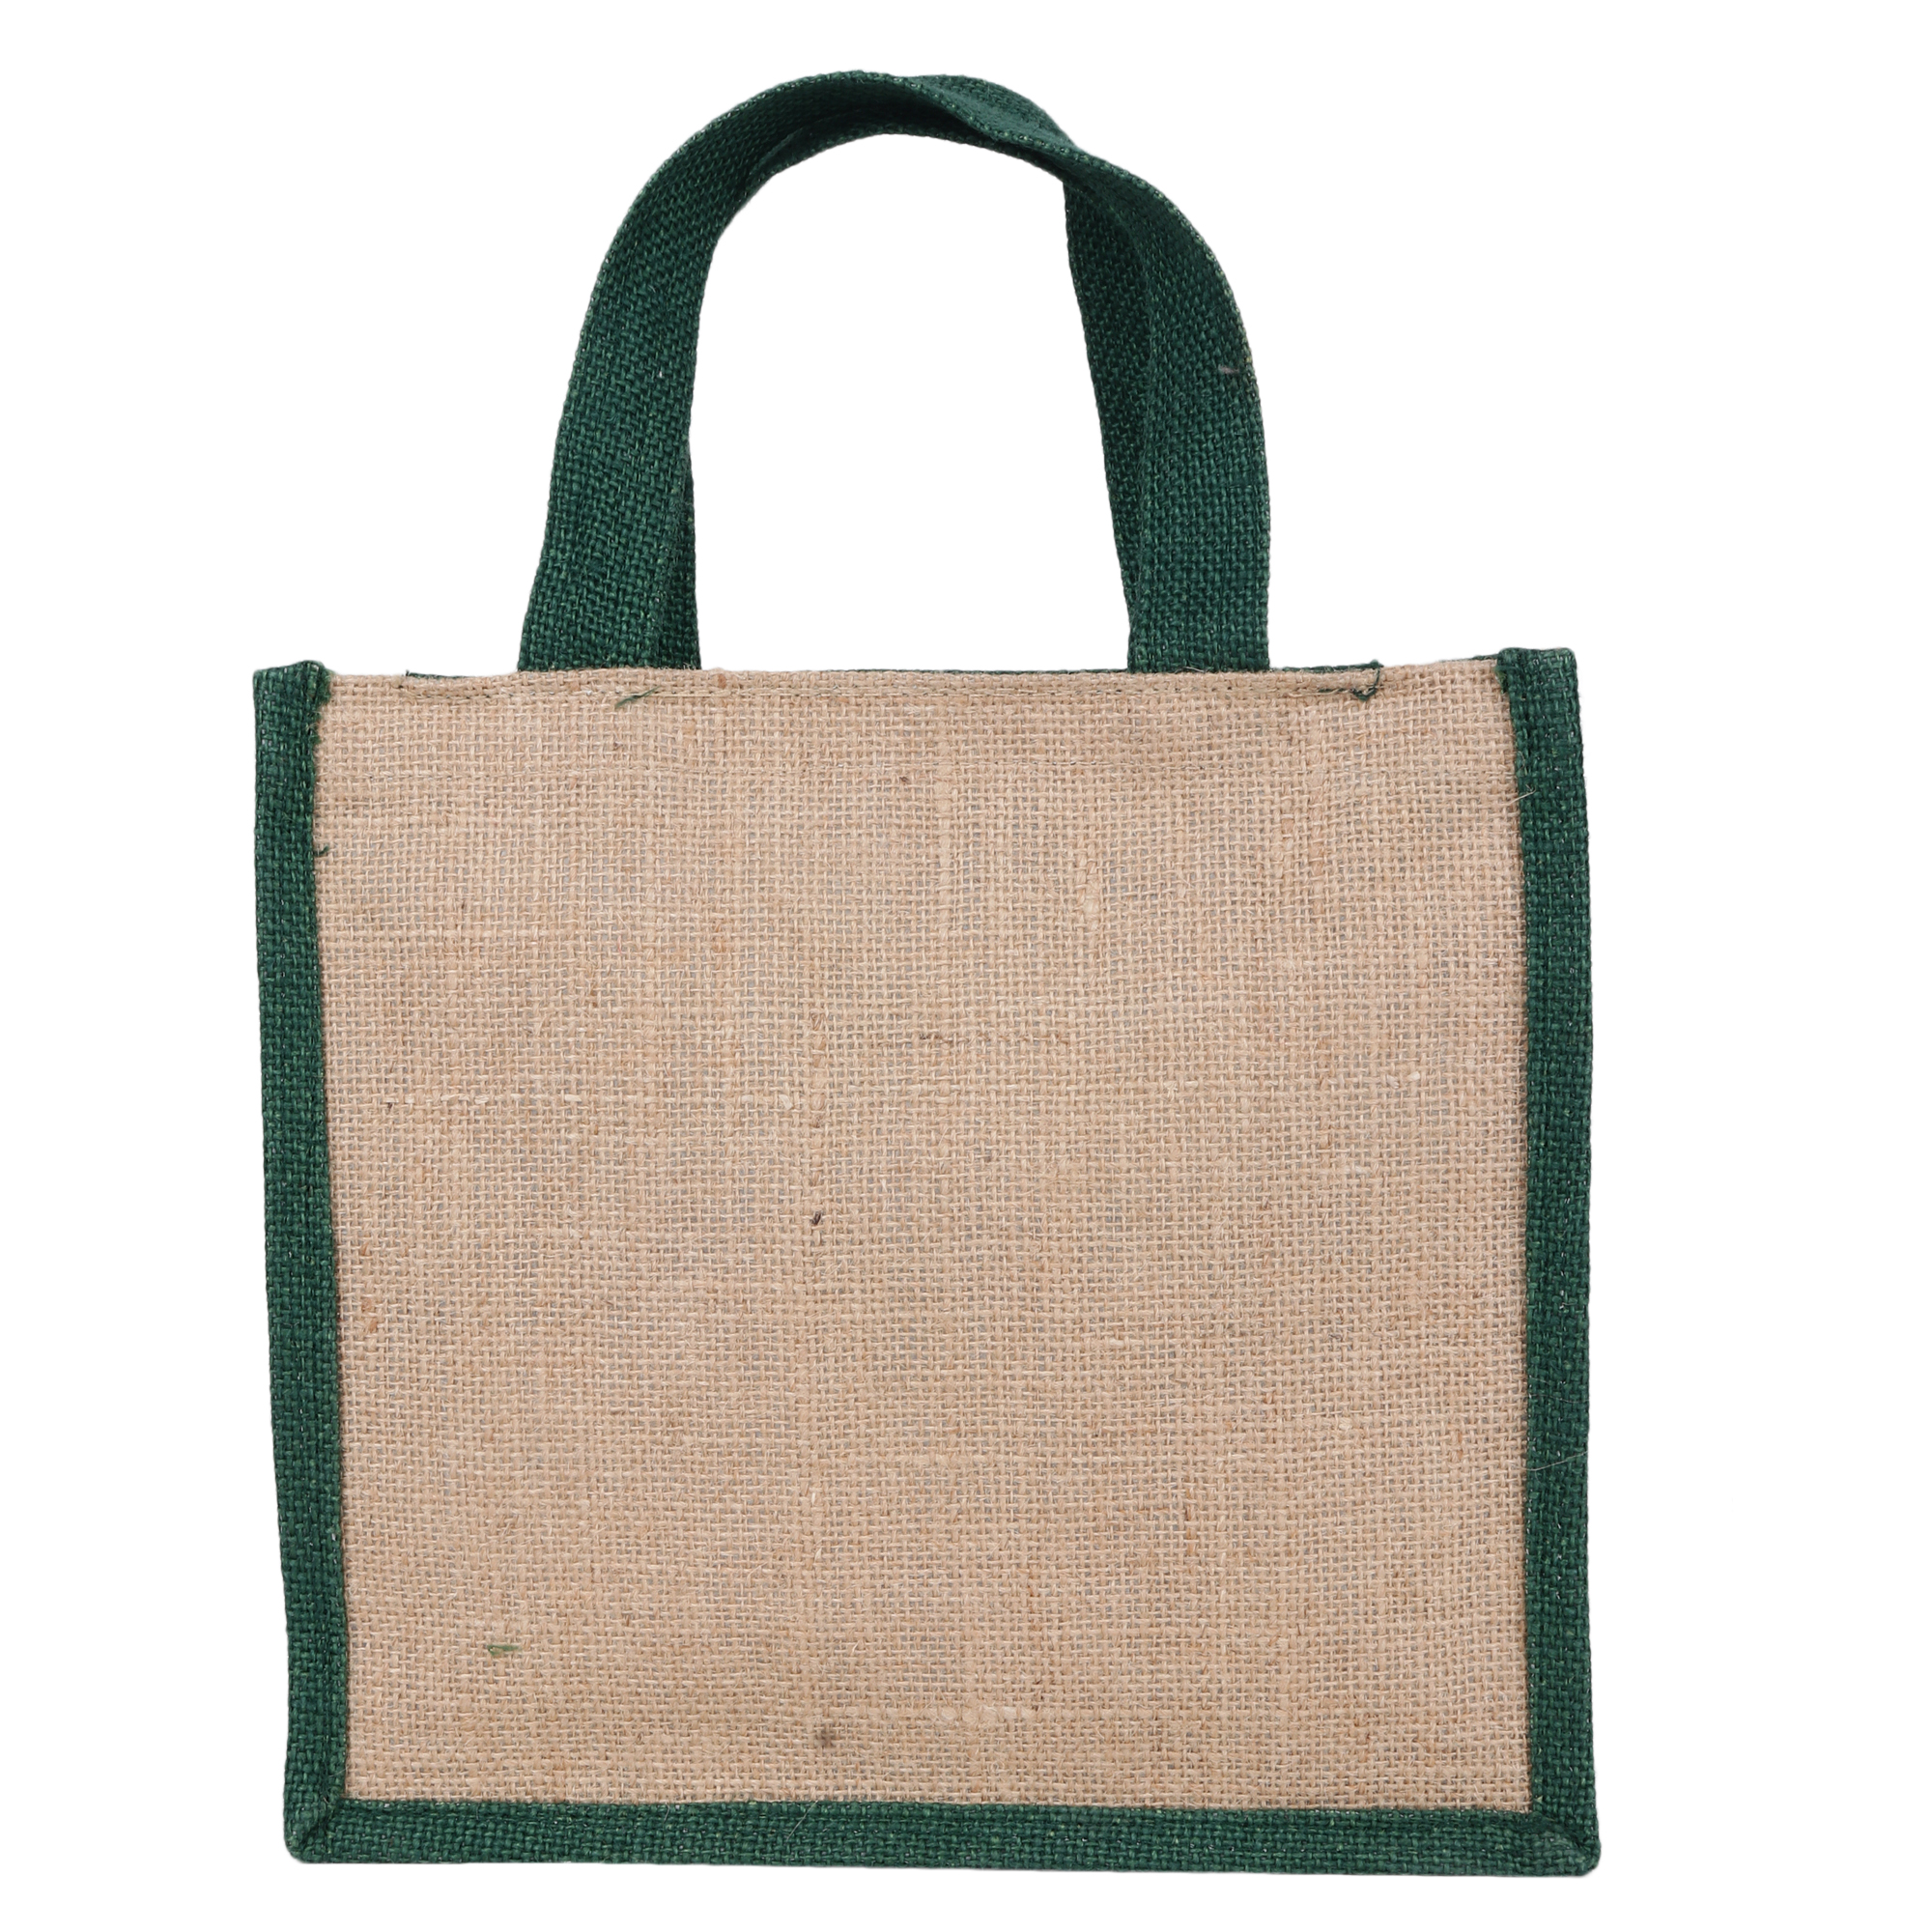 Buy designer jute bags online in India | Business Insider India